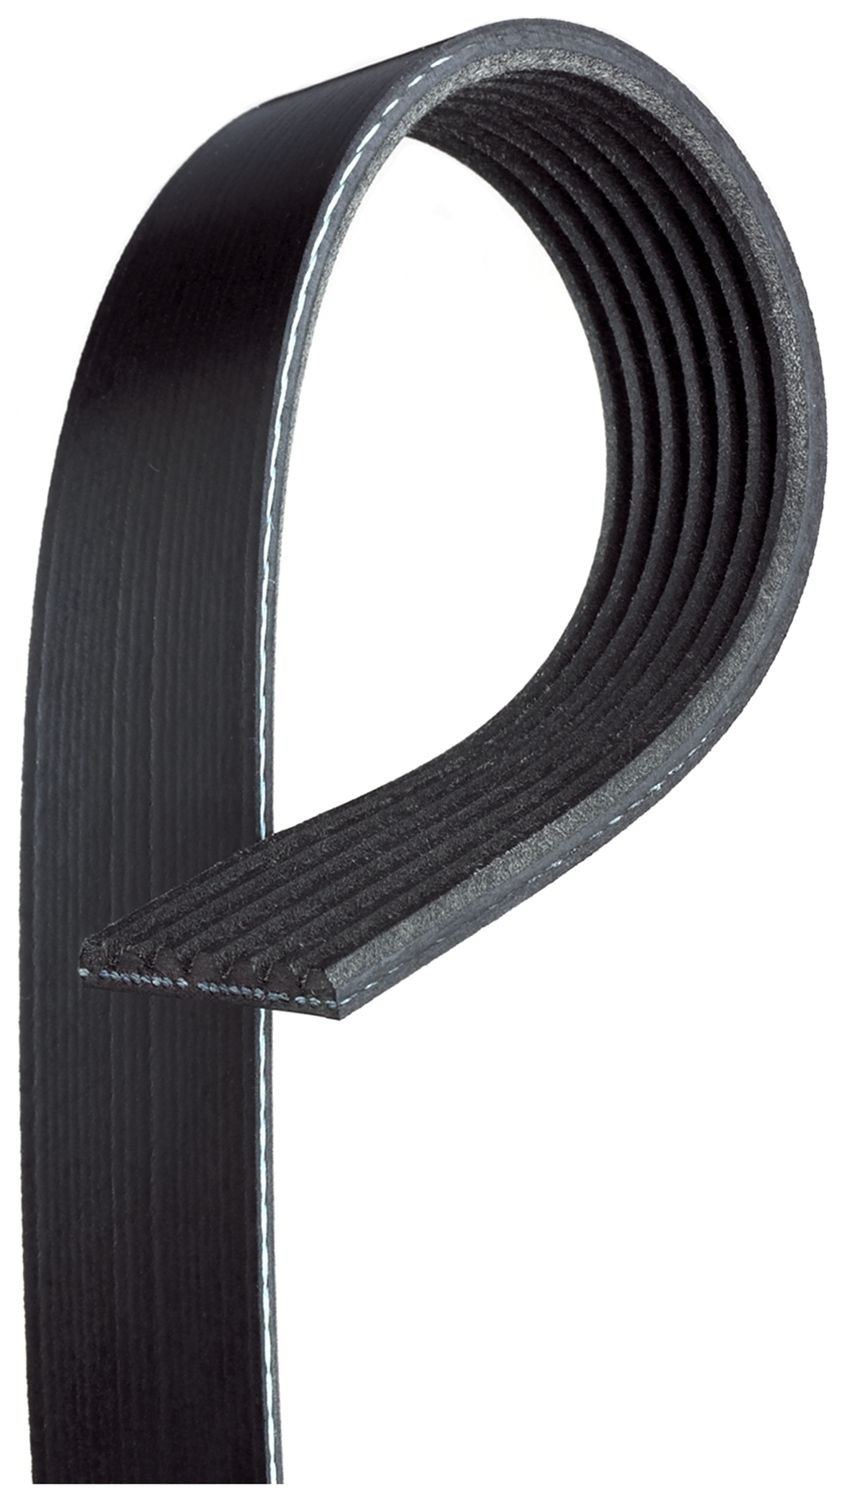 GATES 7PK1290 Serpentine belt 1290mm, 7, G-Force™ C12™ CVT Belt